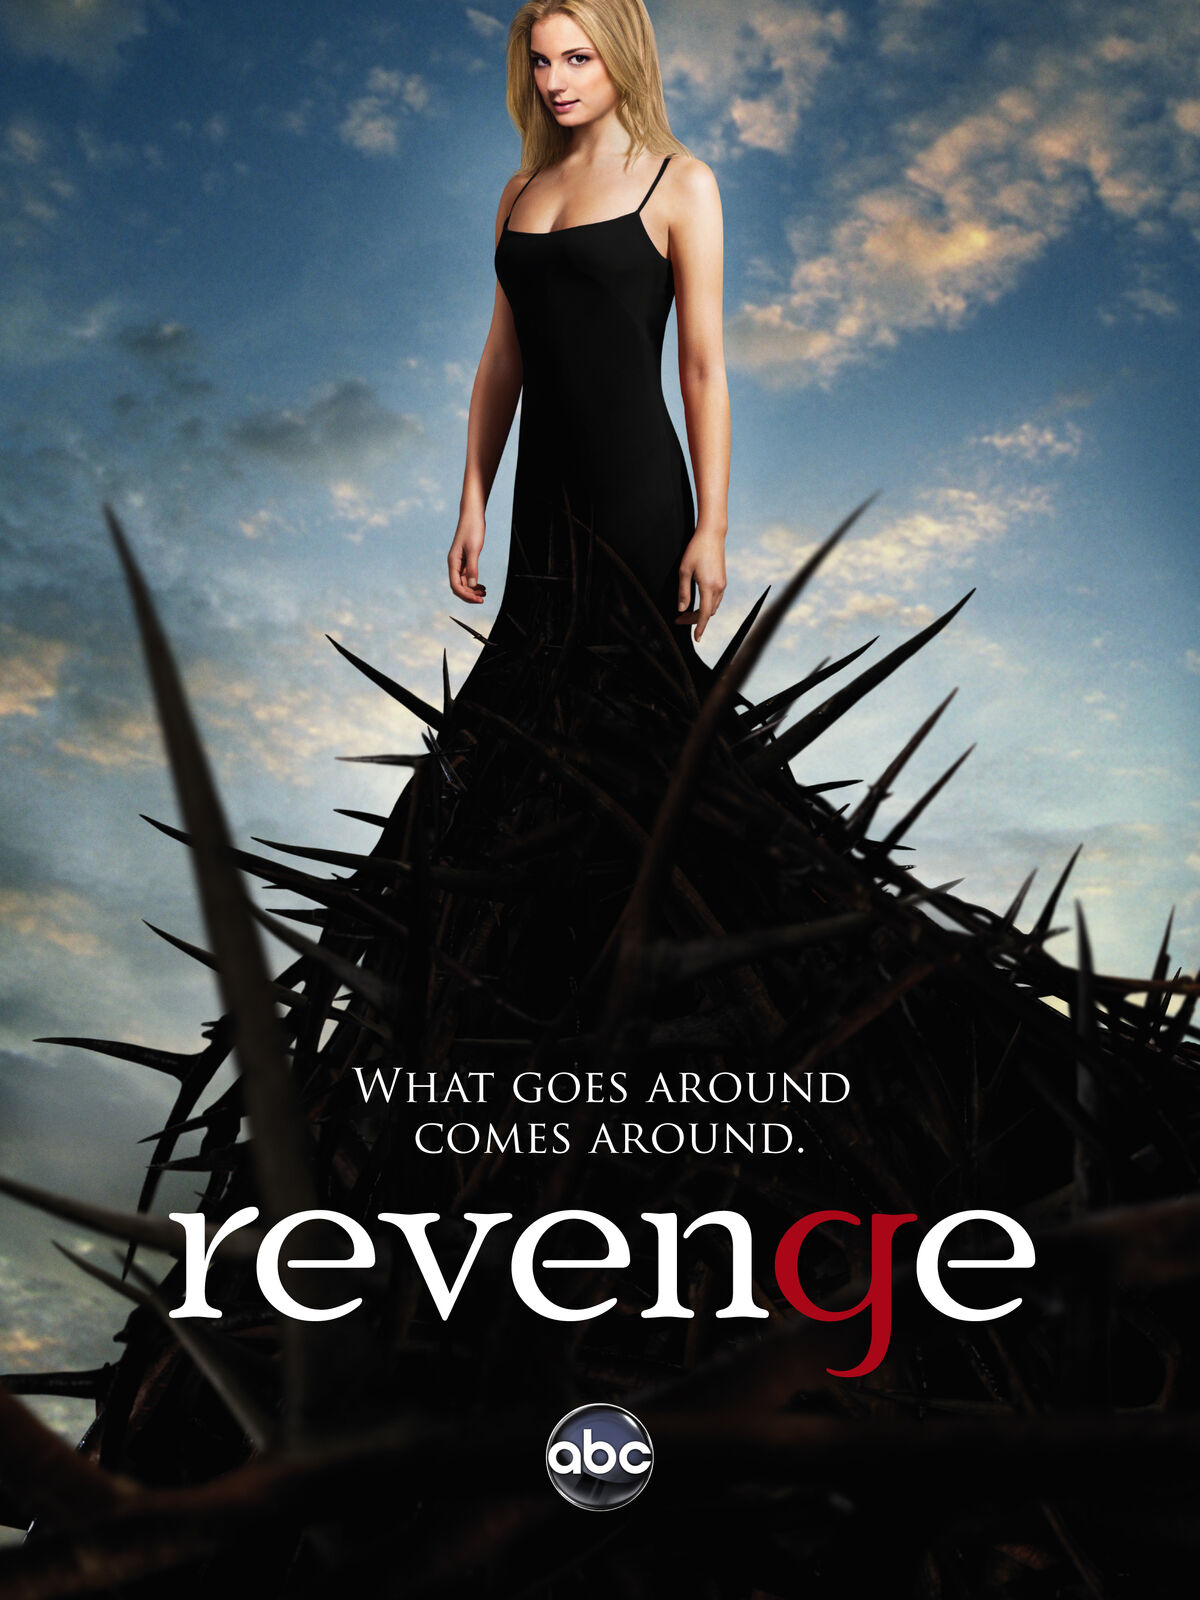 Revenge (season 1) - Wikipedia